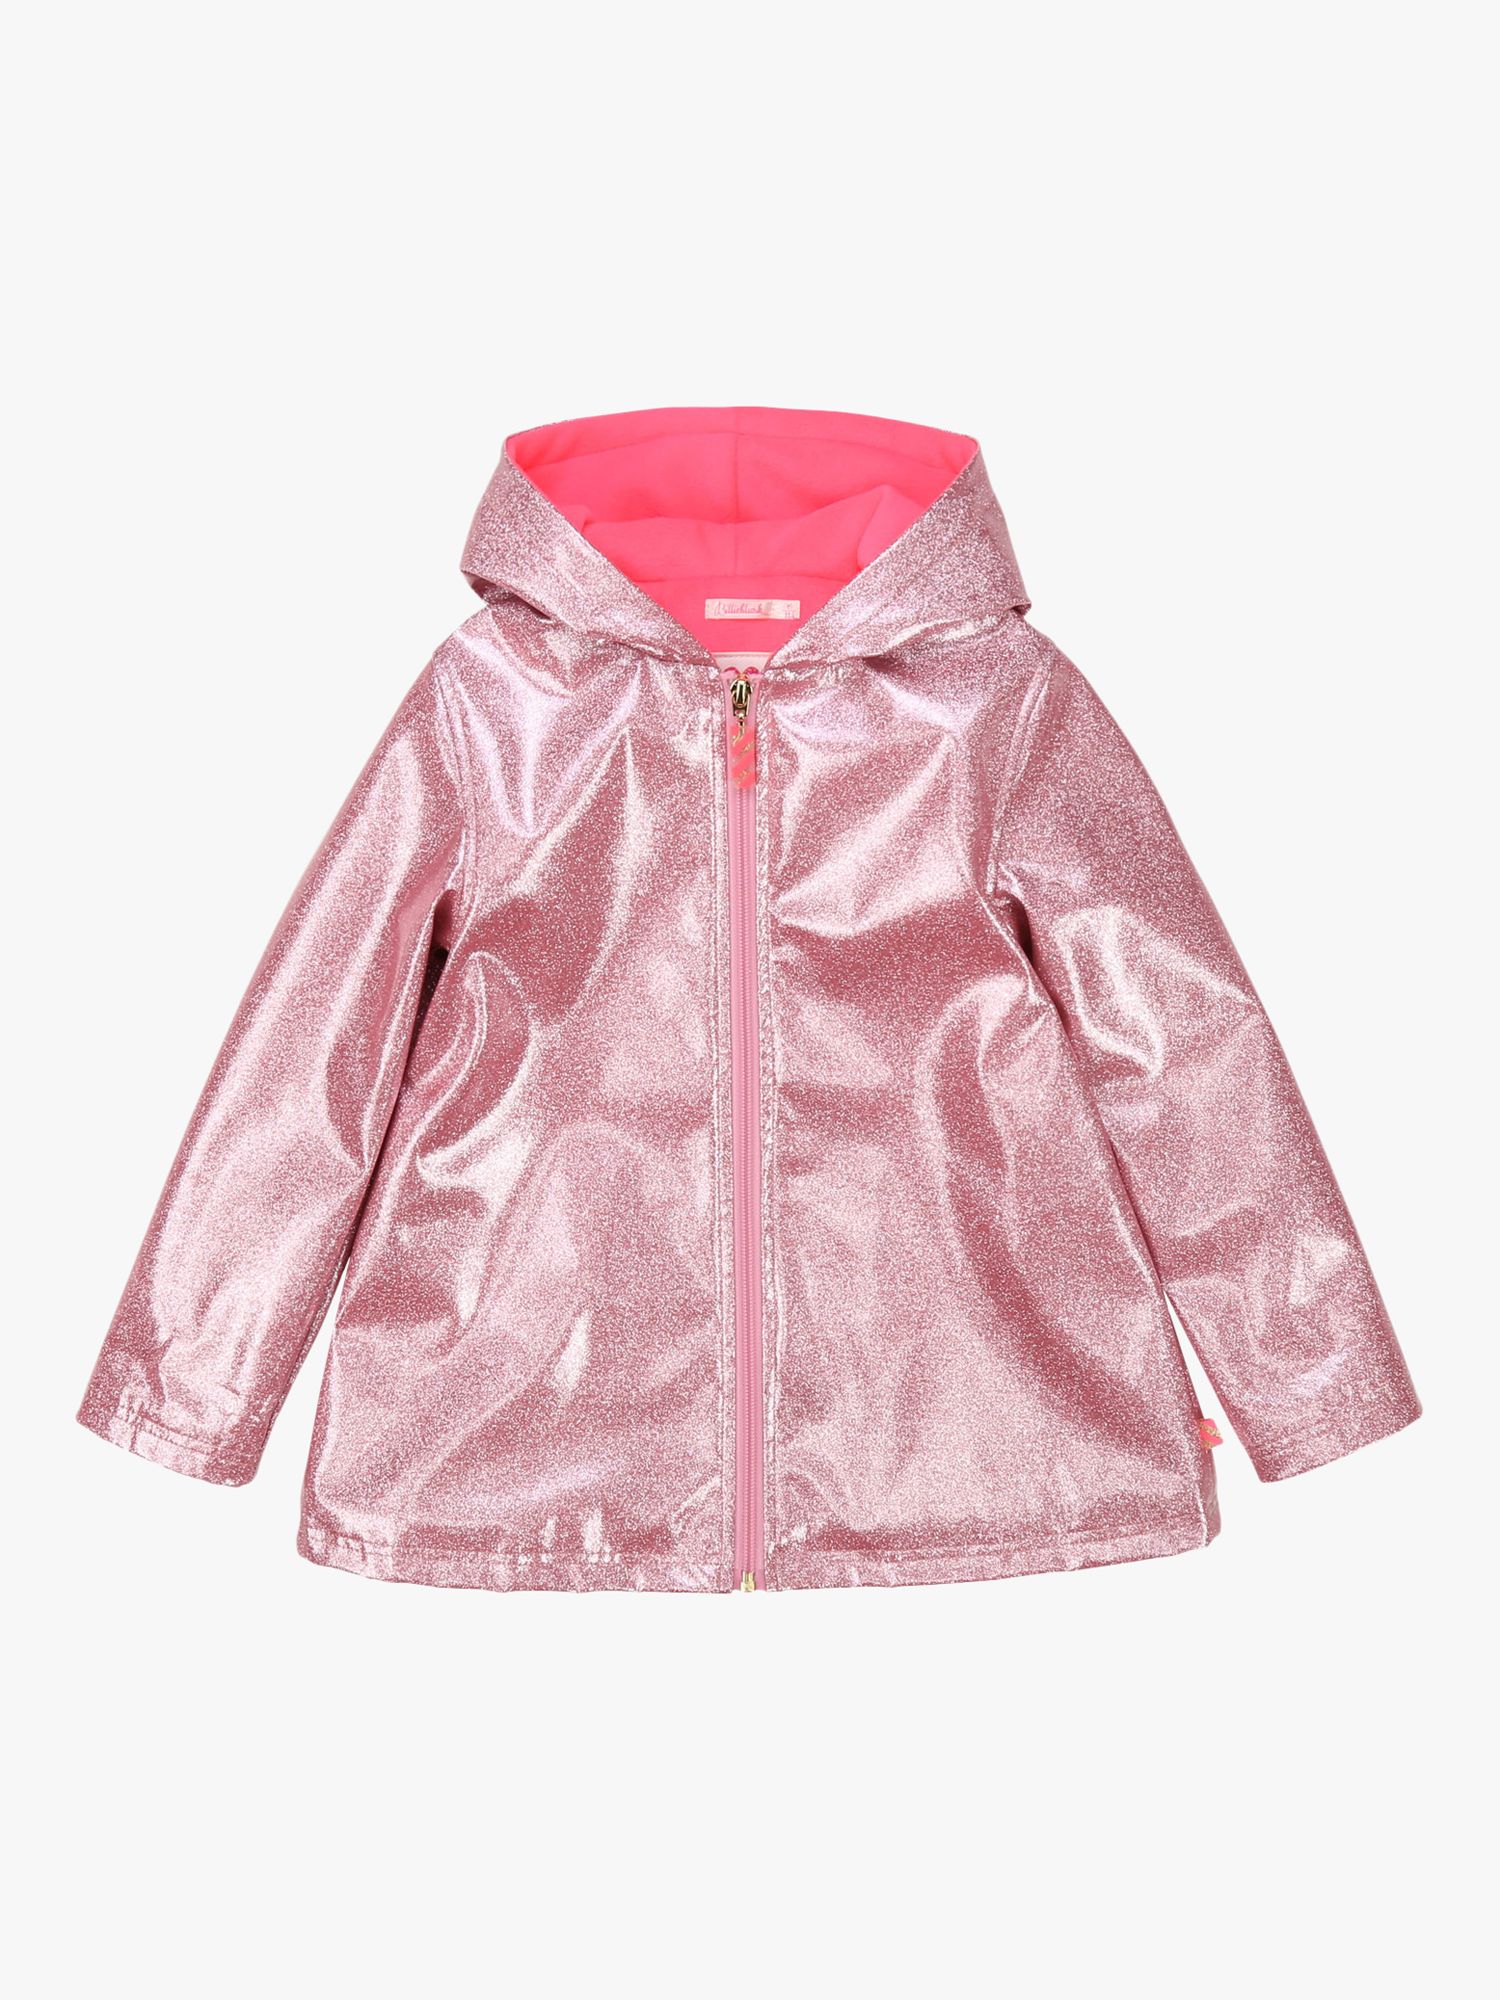 Image of Billieblush Girls Sparkly Hooded Raincoat Pink